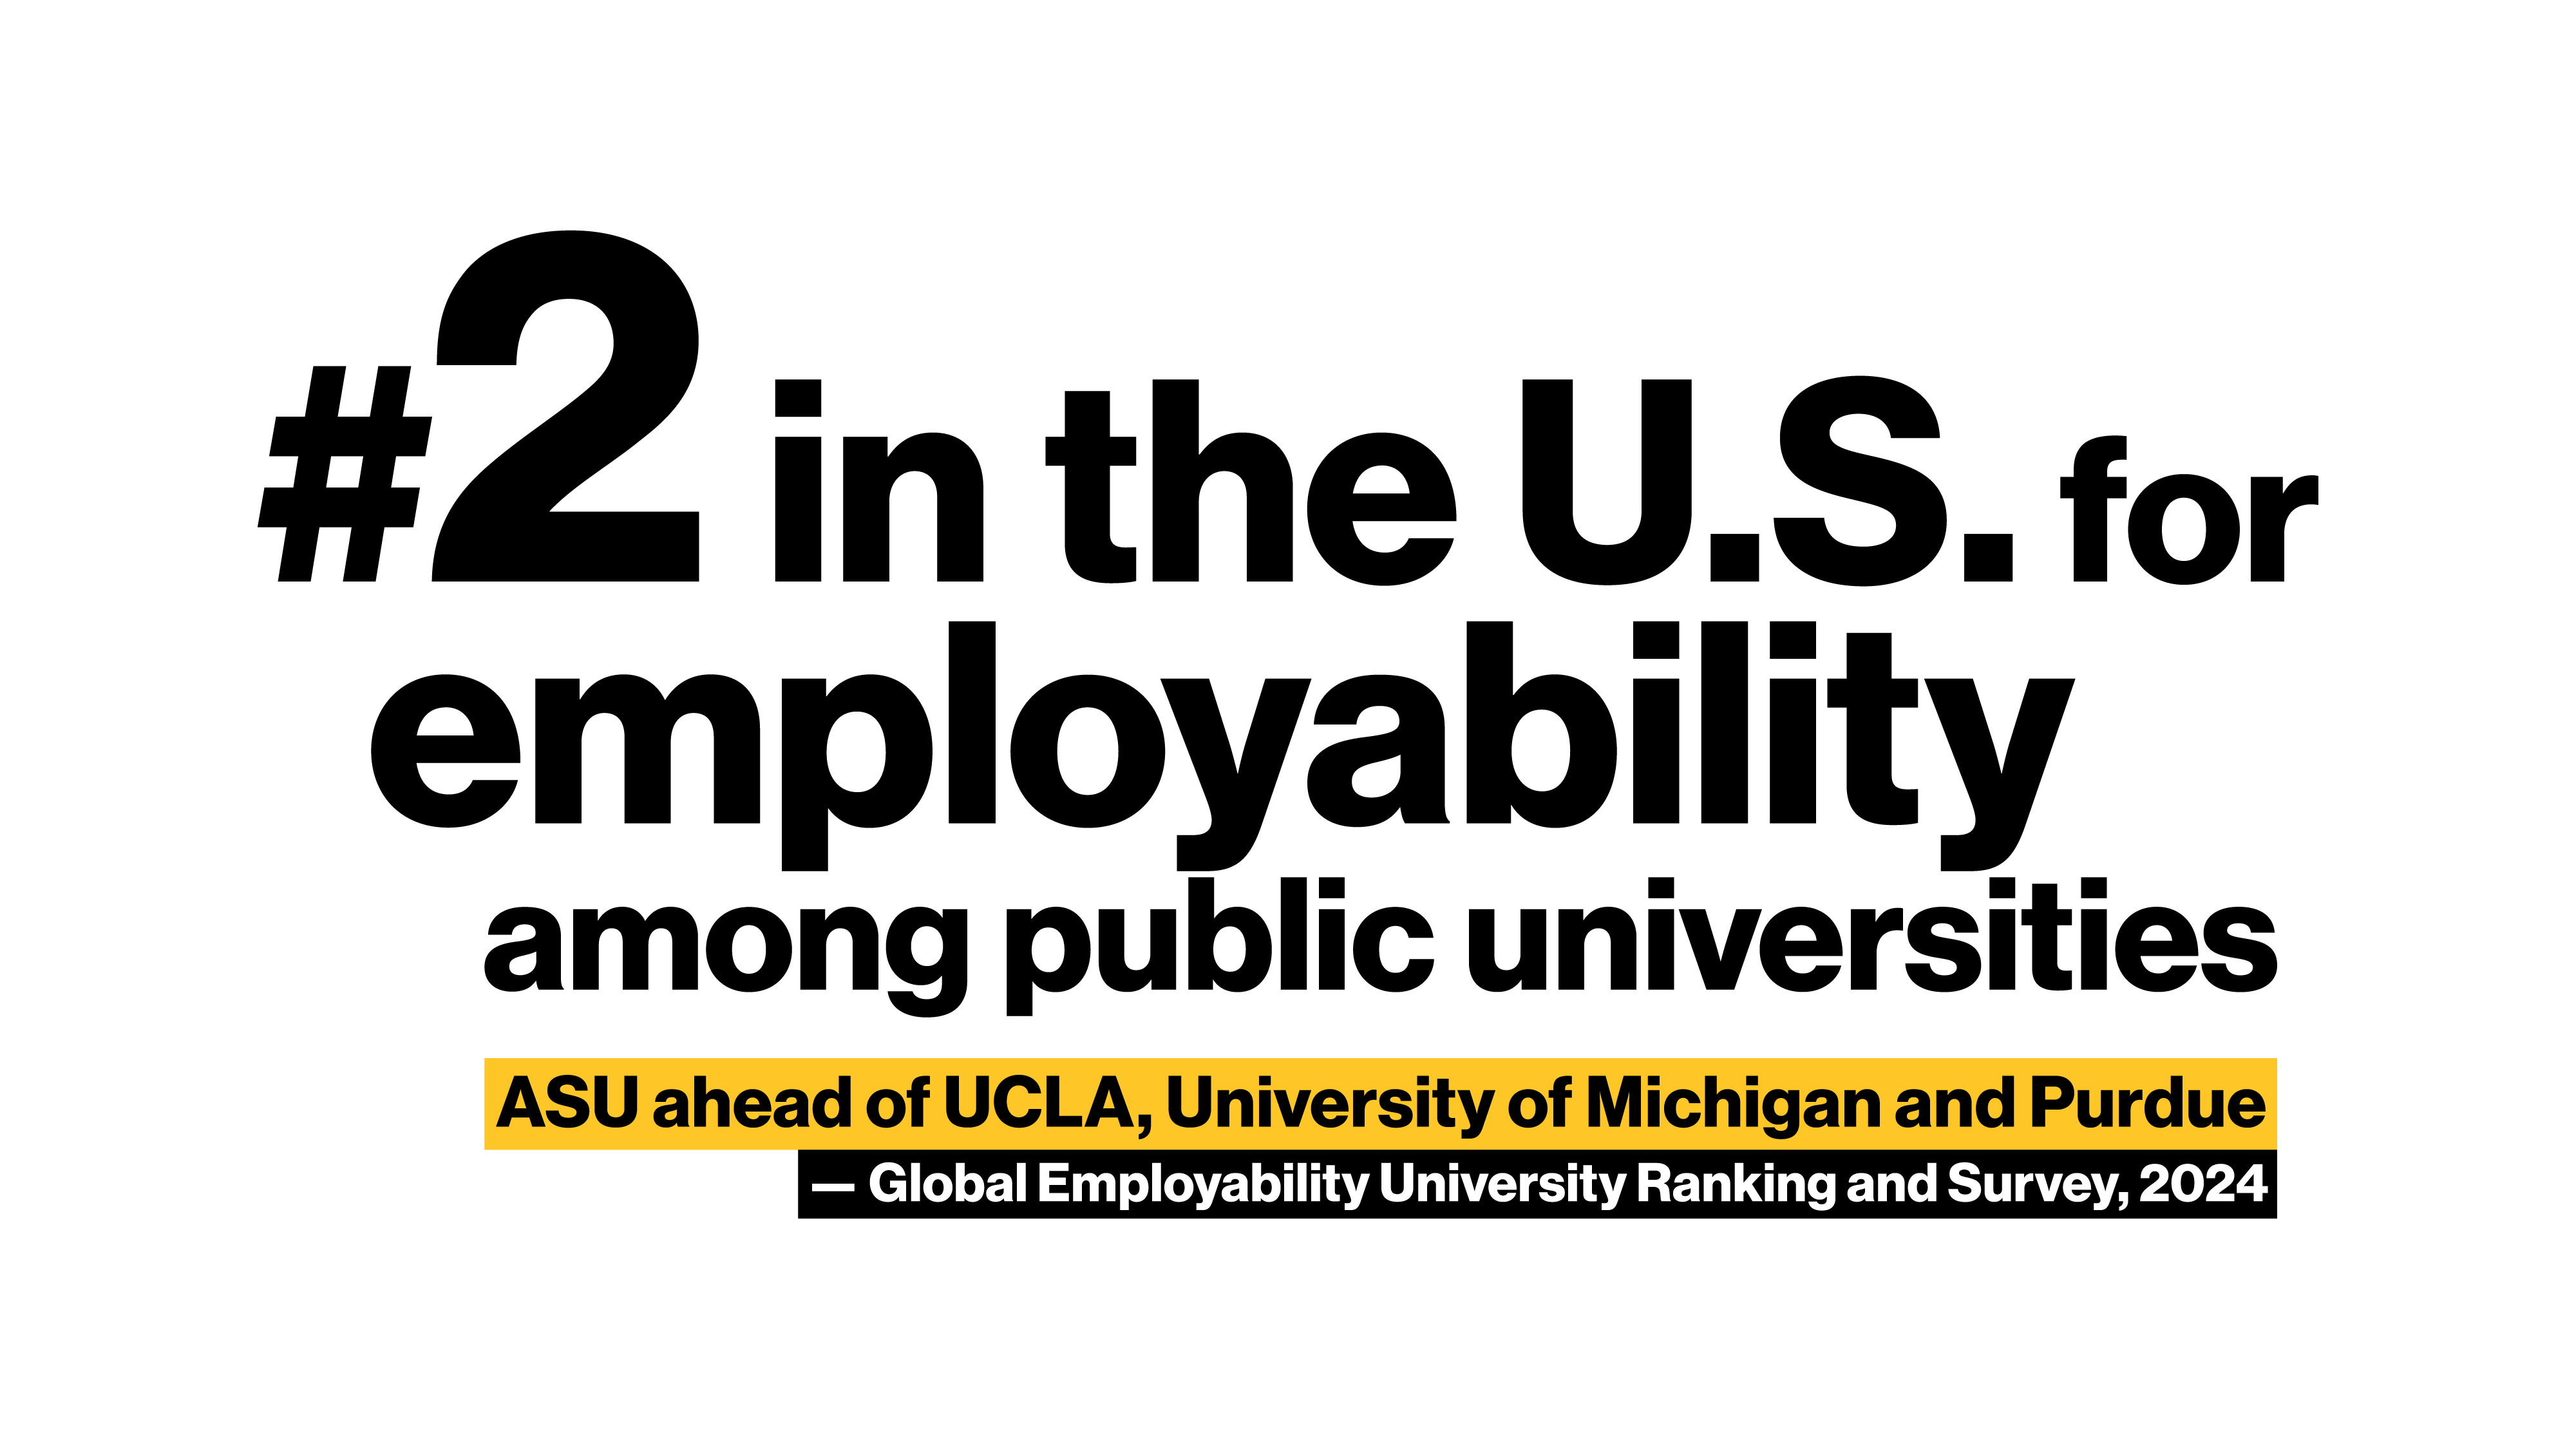 ASU most employable